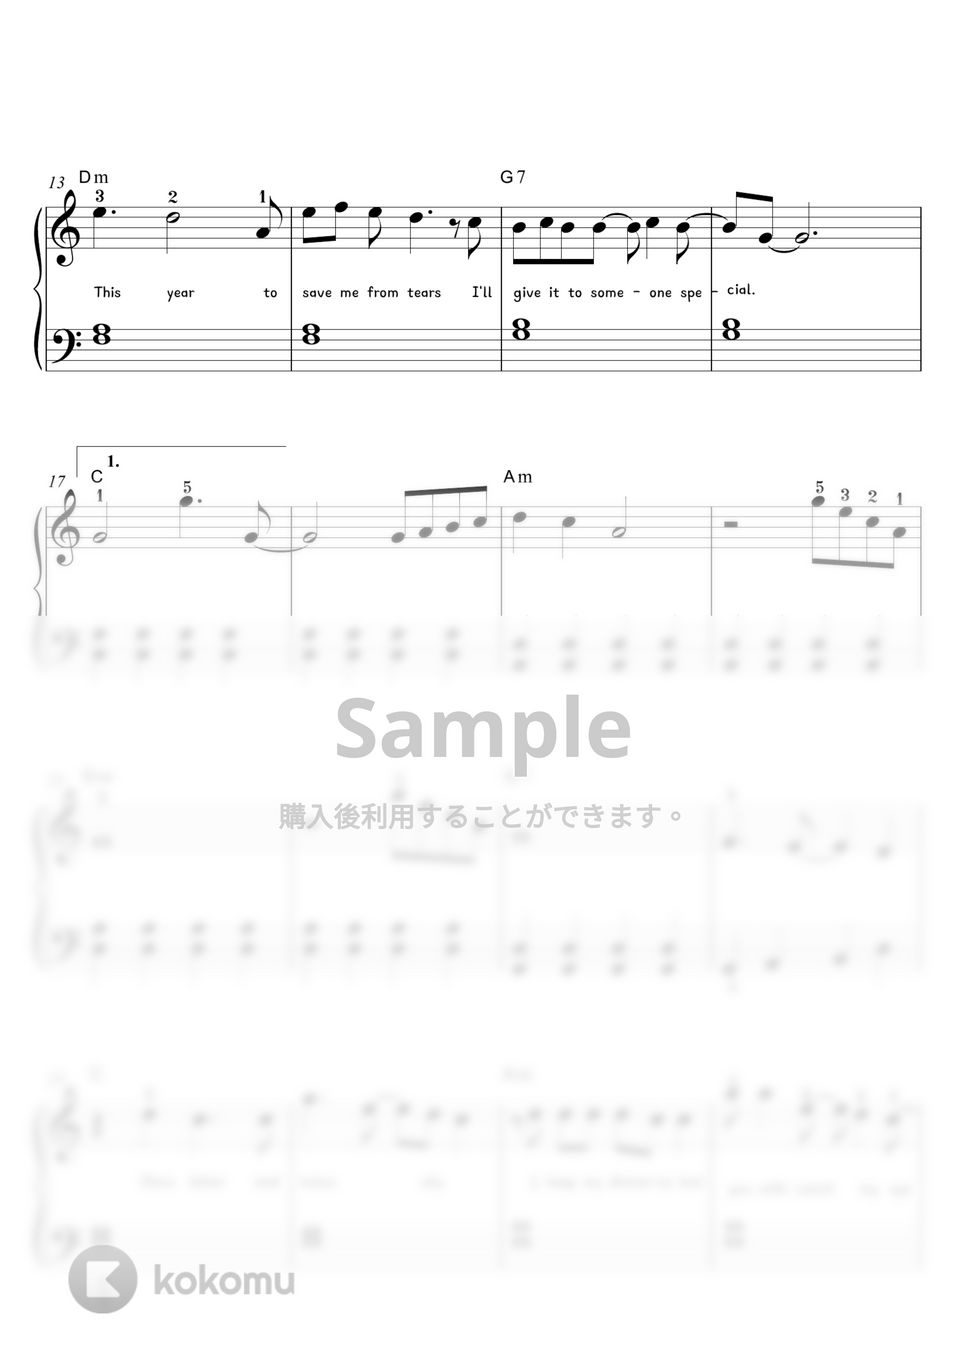 Wham! - Last Christmas (初級 / 伴奏音源付き) by A-sam